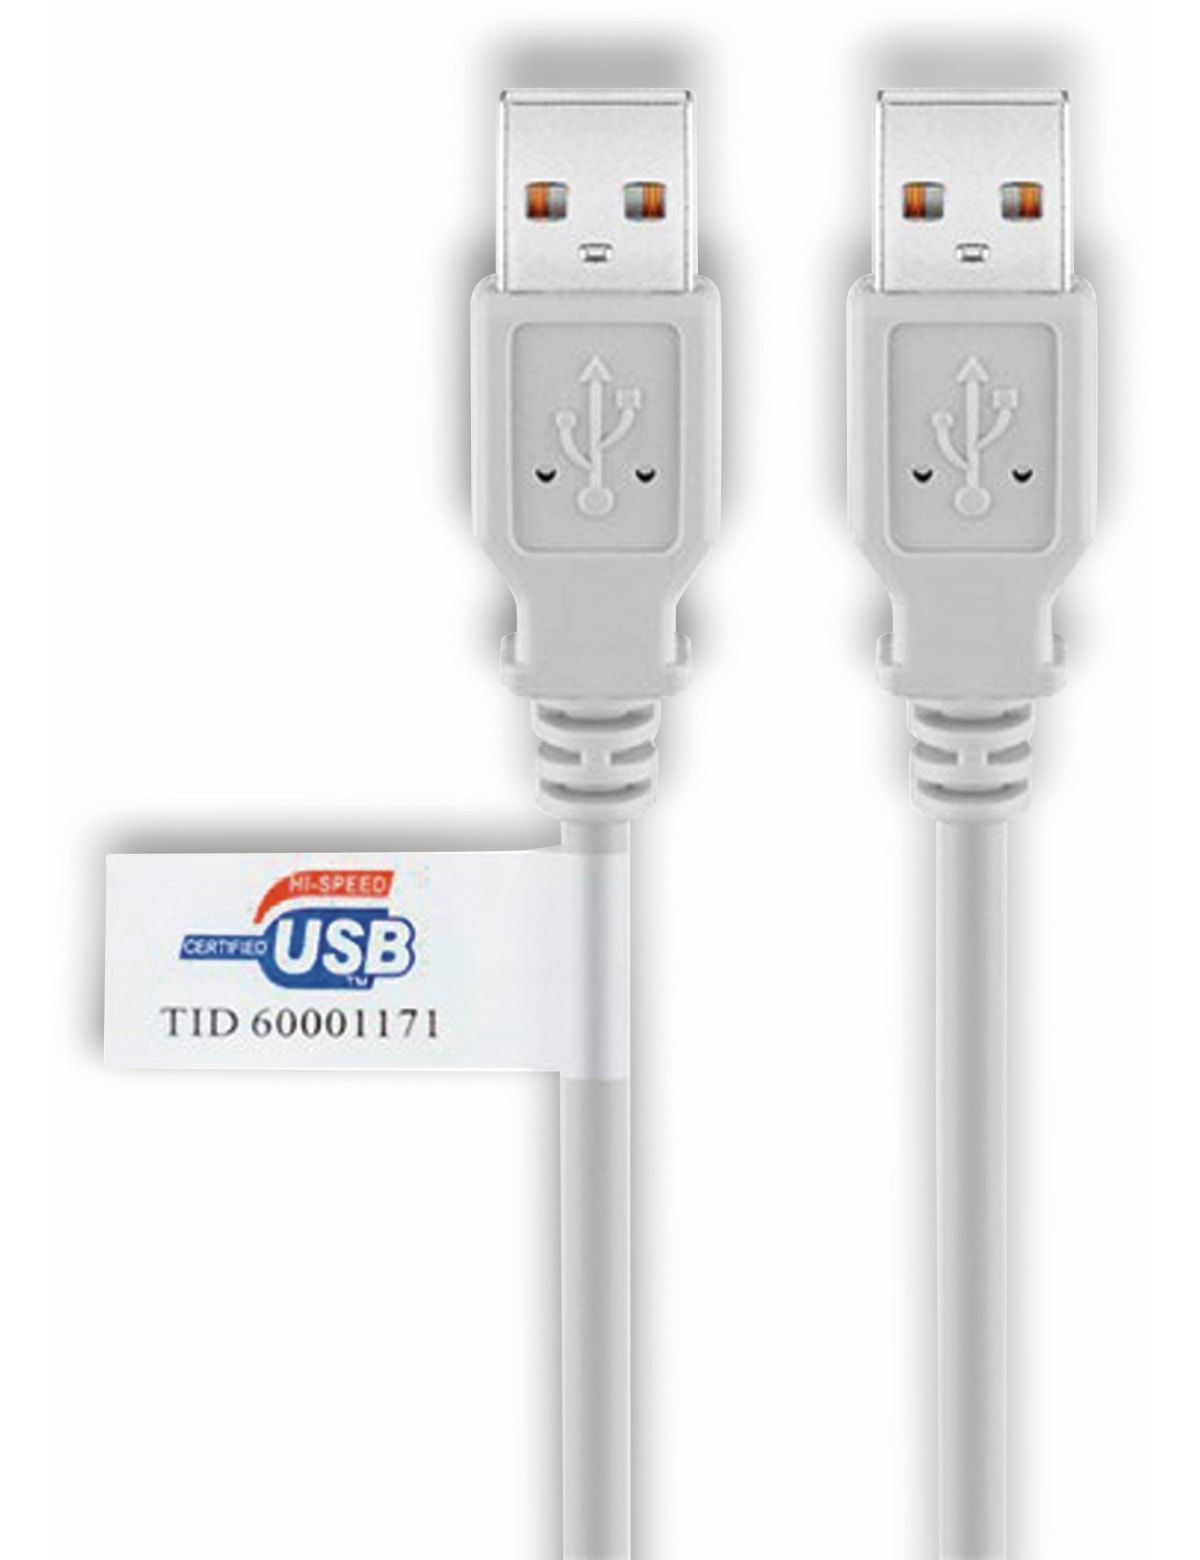 GOOBAY USB 2.0 Typ A/A Hi-Speed m, grau, Anschlusskabel, Kabel, 2 2 m 50796